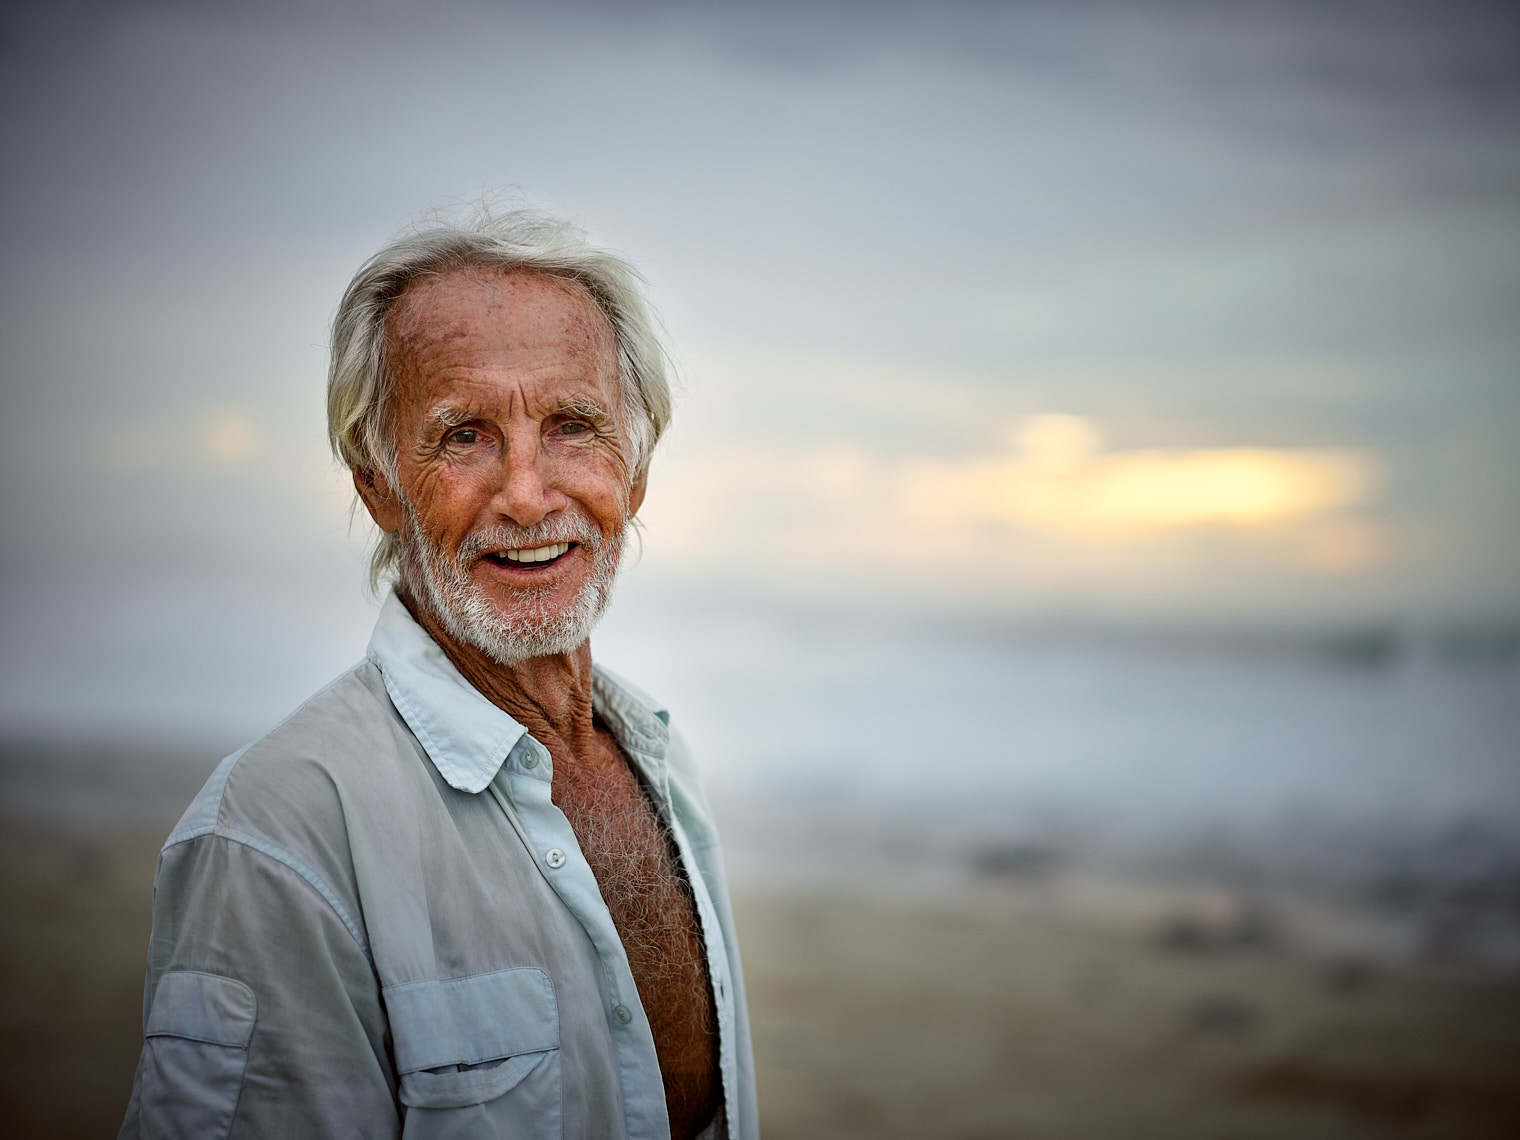 Kevin Steele - portrait of an older bearded man on the beach